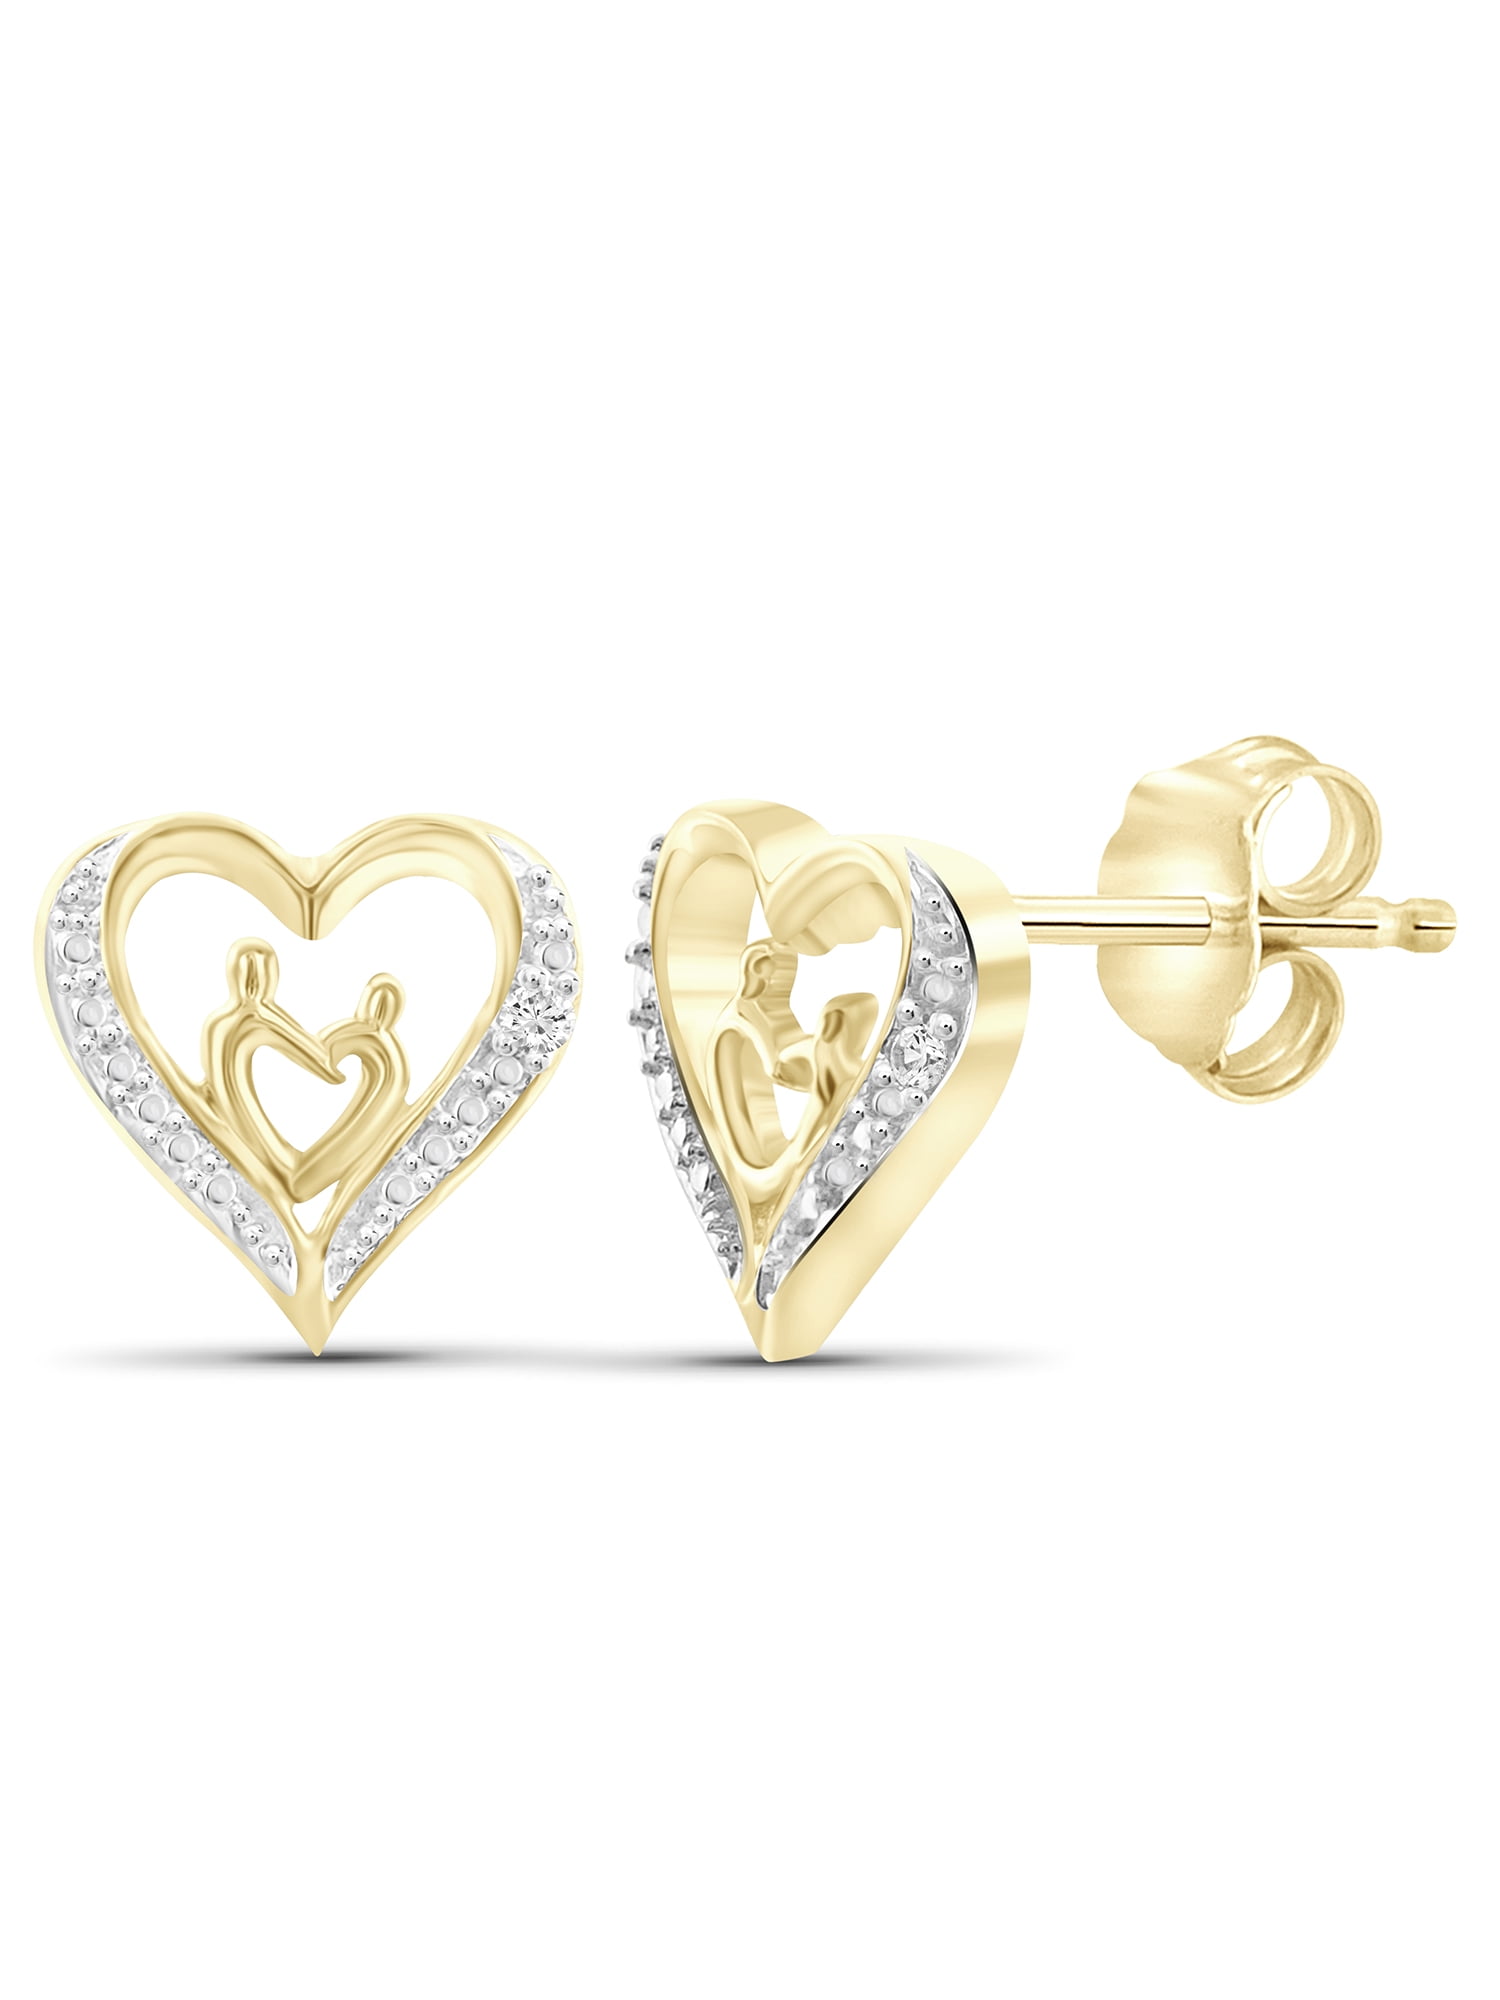 Childrens Baby Girl kids Crystal Cute Bee Silver Stud Earrings 14k Gold Filled 